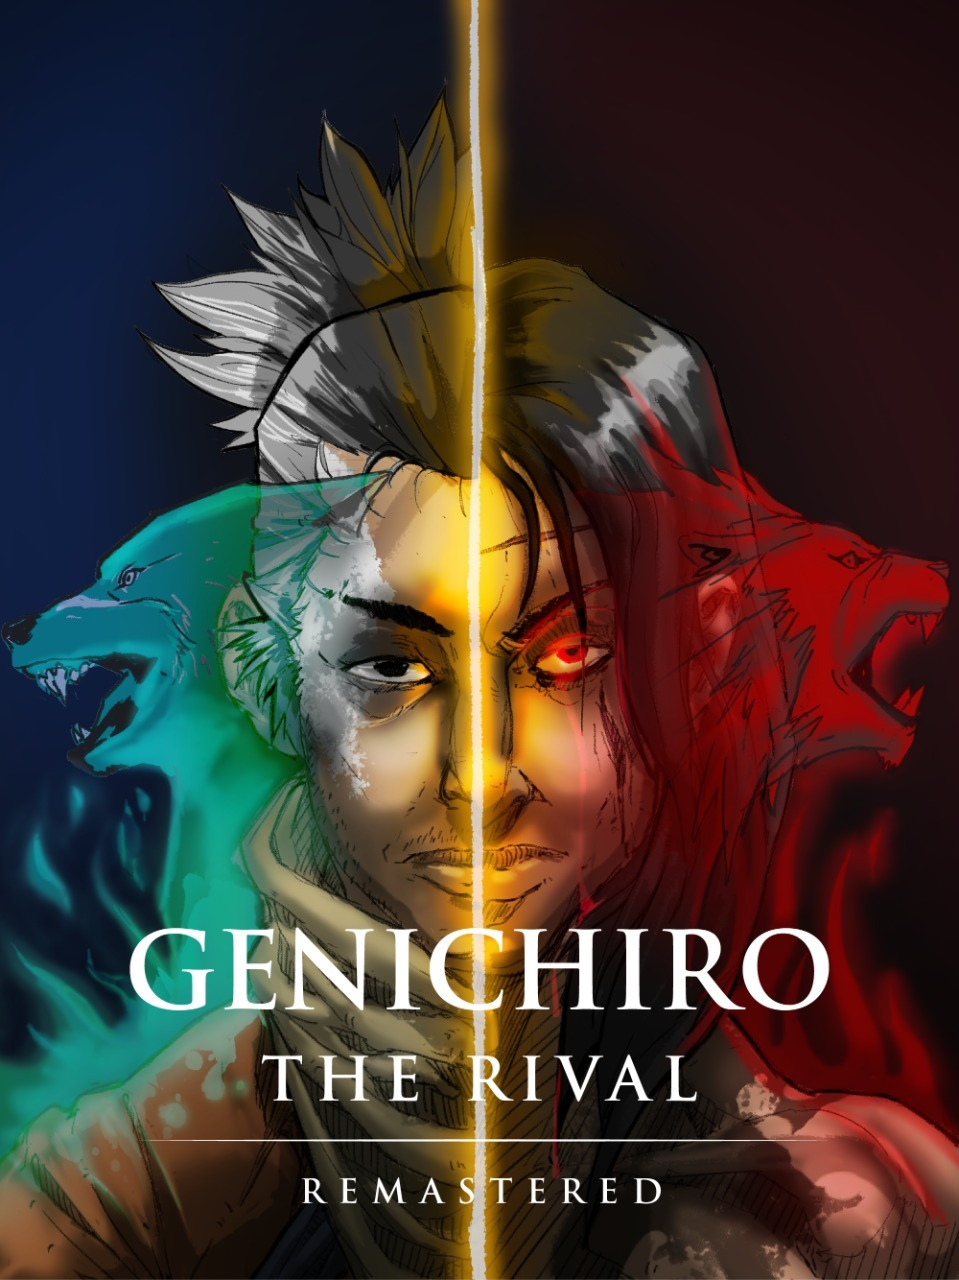 preview for Genichiro:The Rival